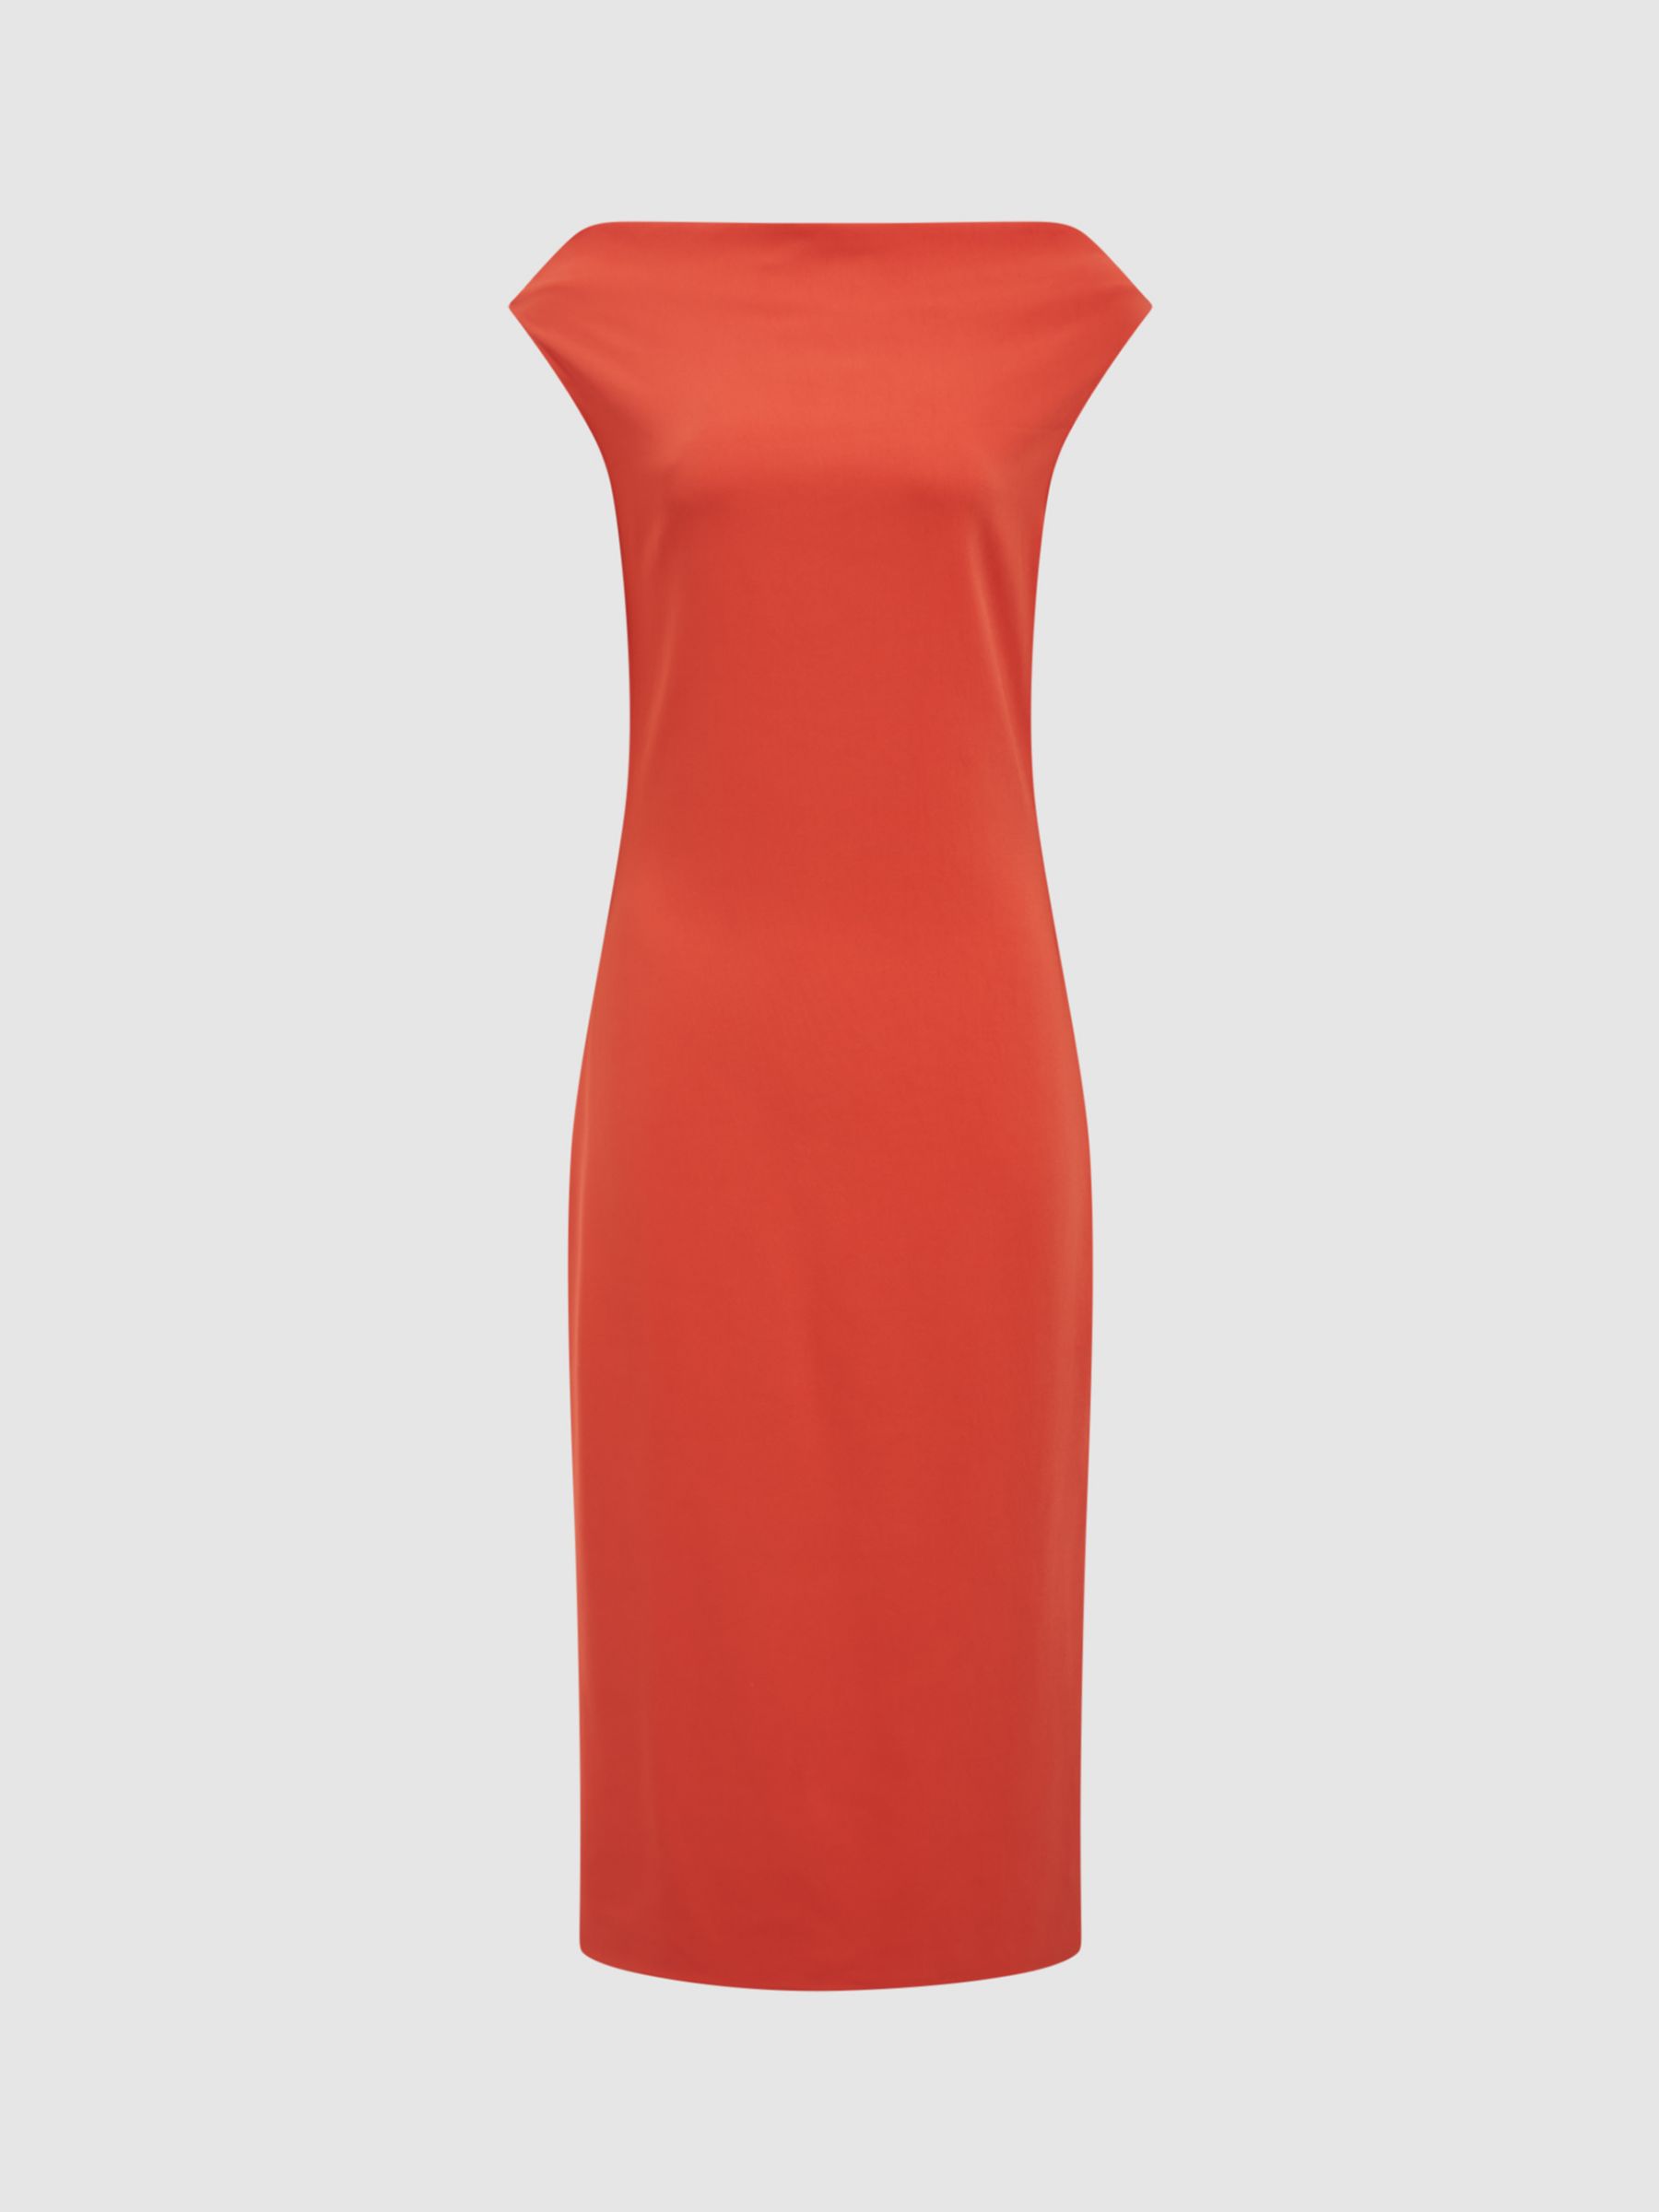 Reiss Zaria Asymmetric Neck Midi Dress, Coral at John Lewis & Partners